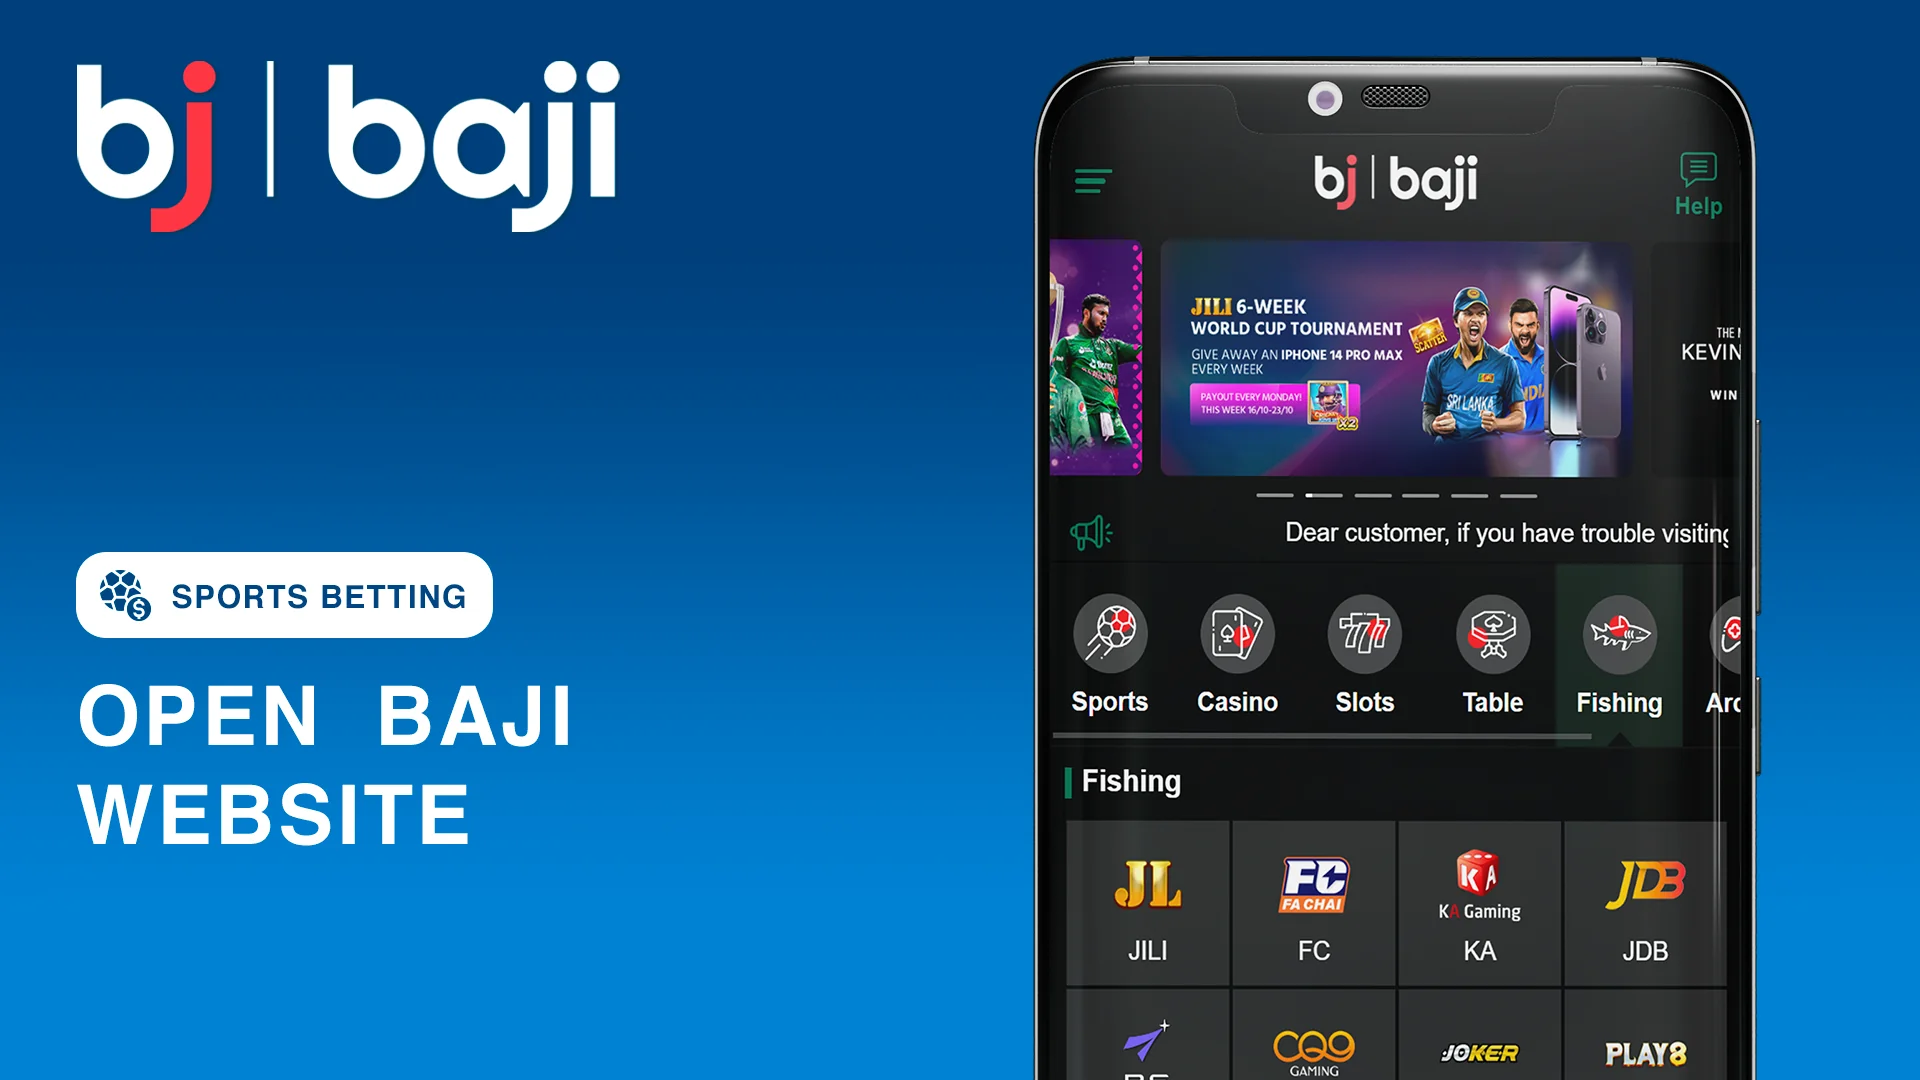 Open Baji Website to start betting